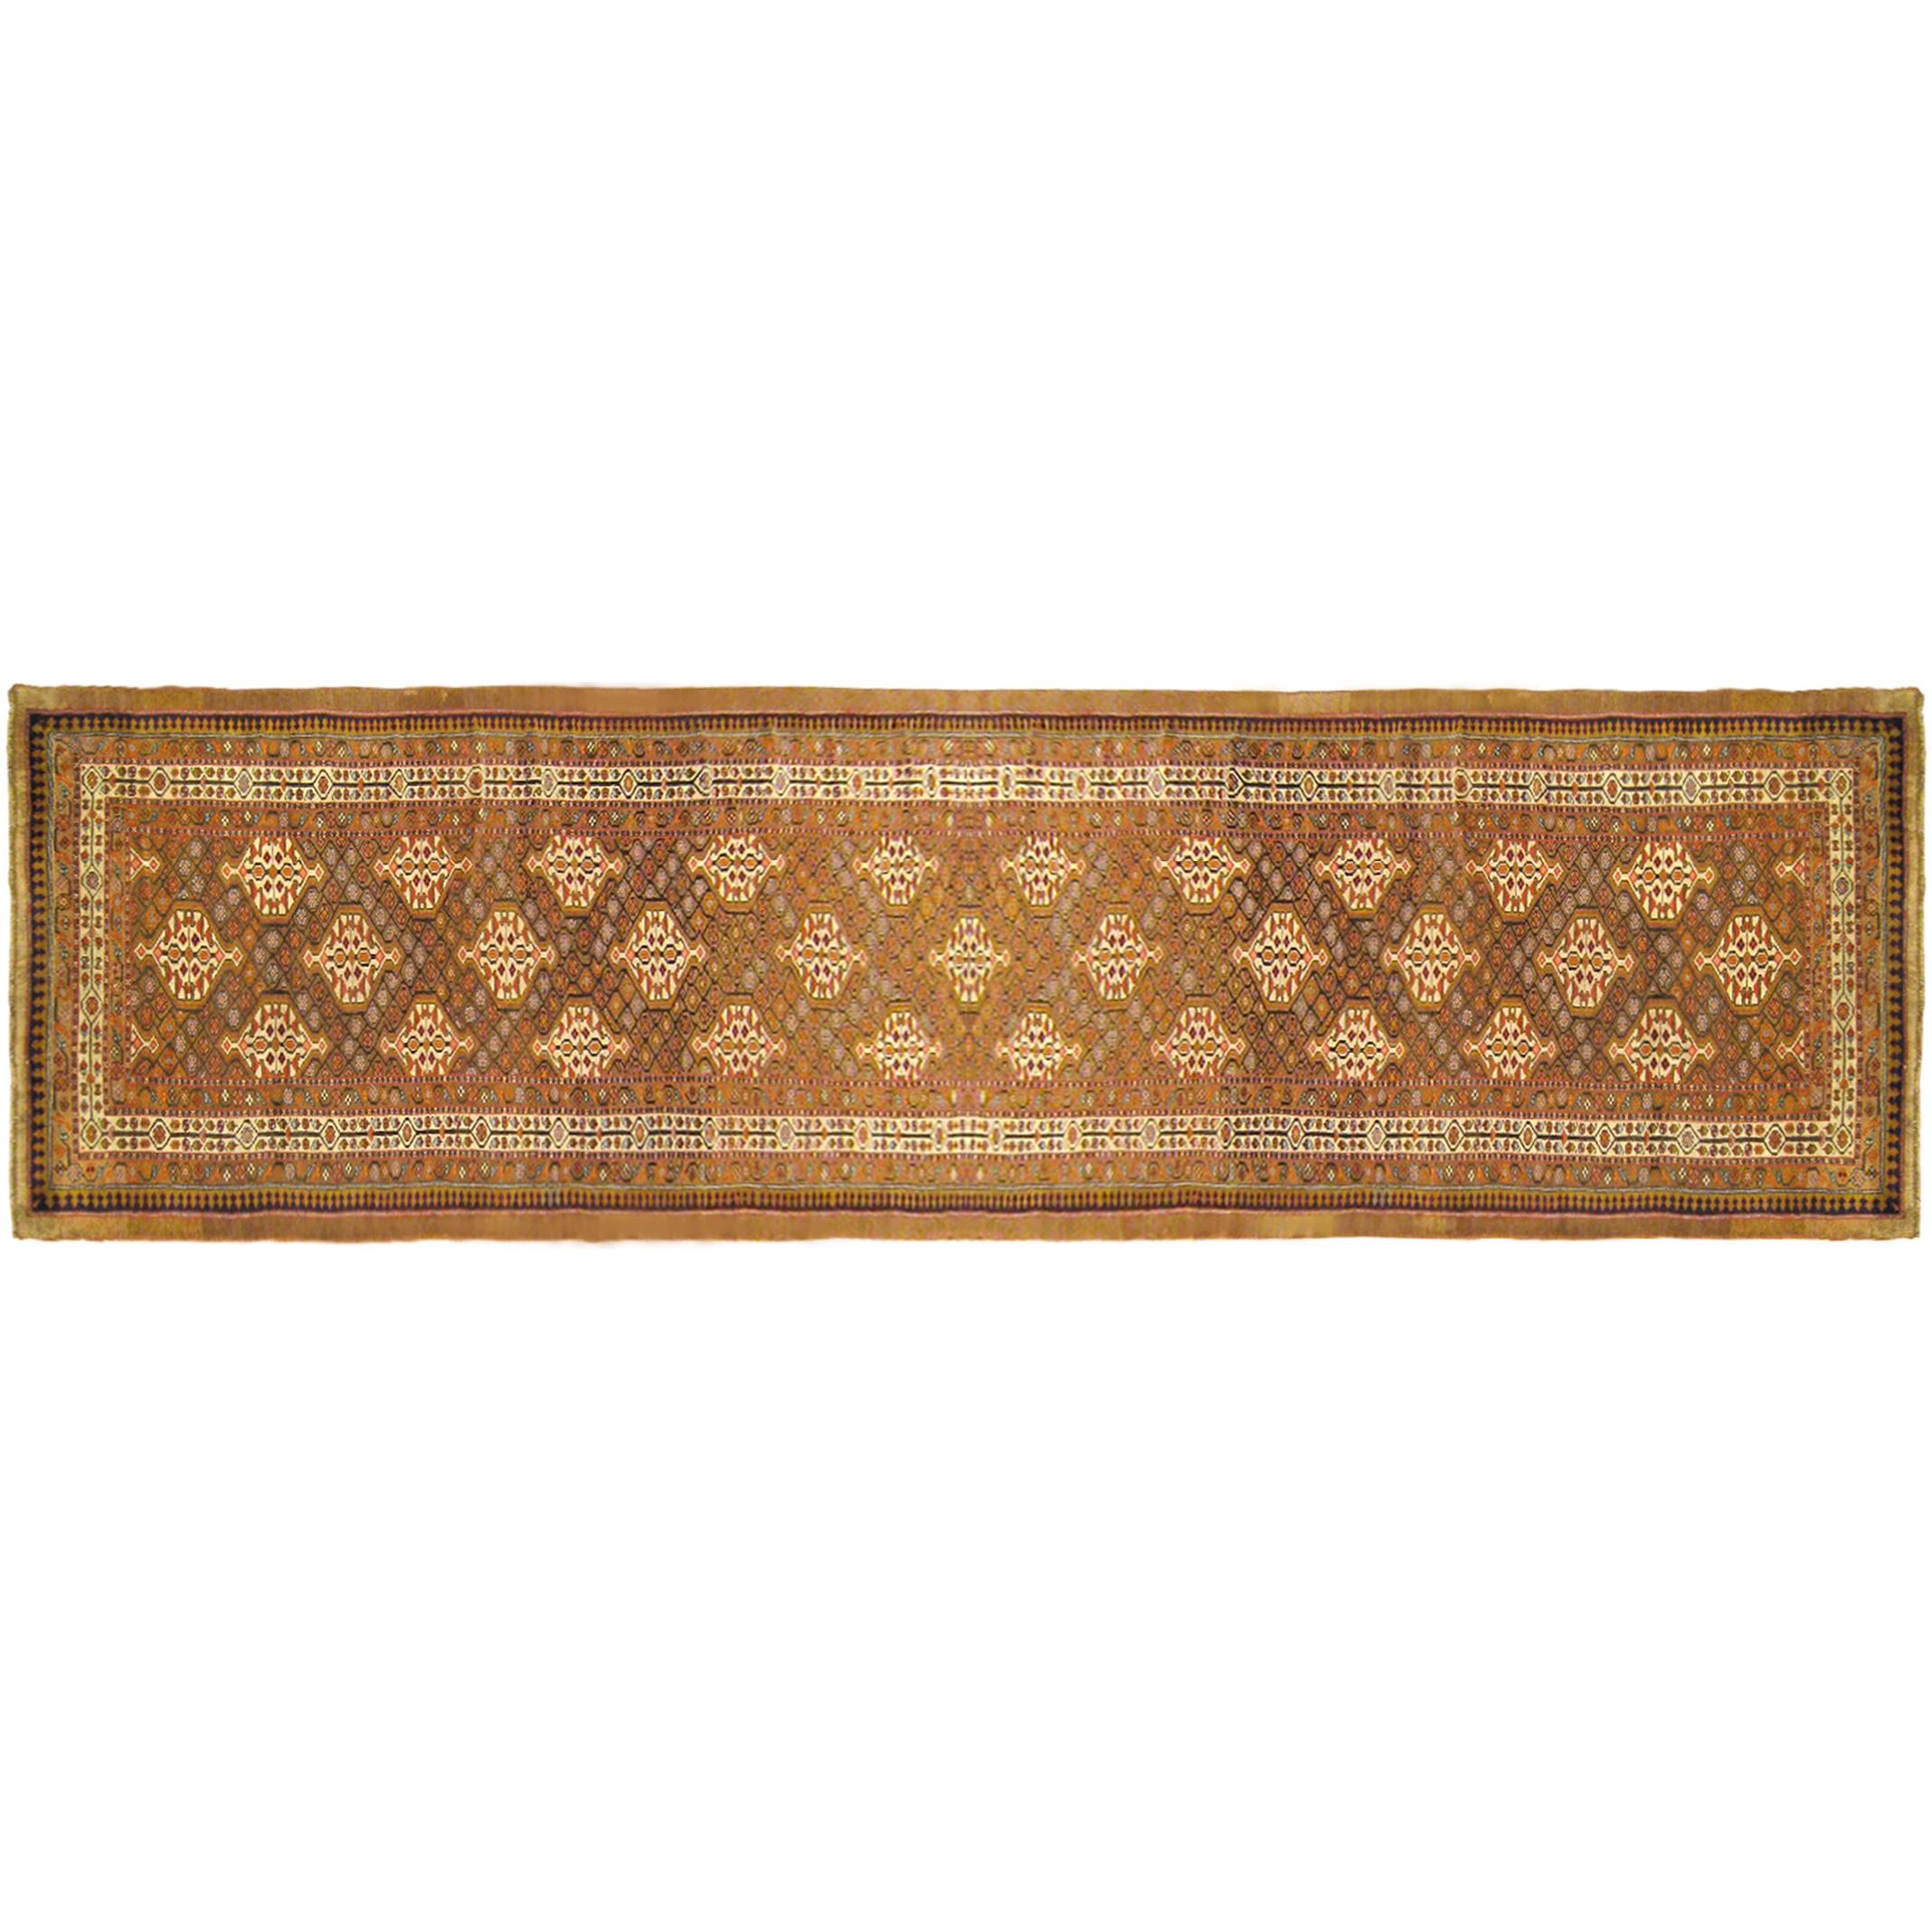 Antique Persian Hamadan Camel Hair Oriental Rug, in Runner Size w/ Repeat Design